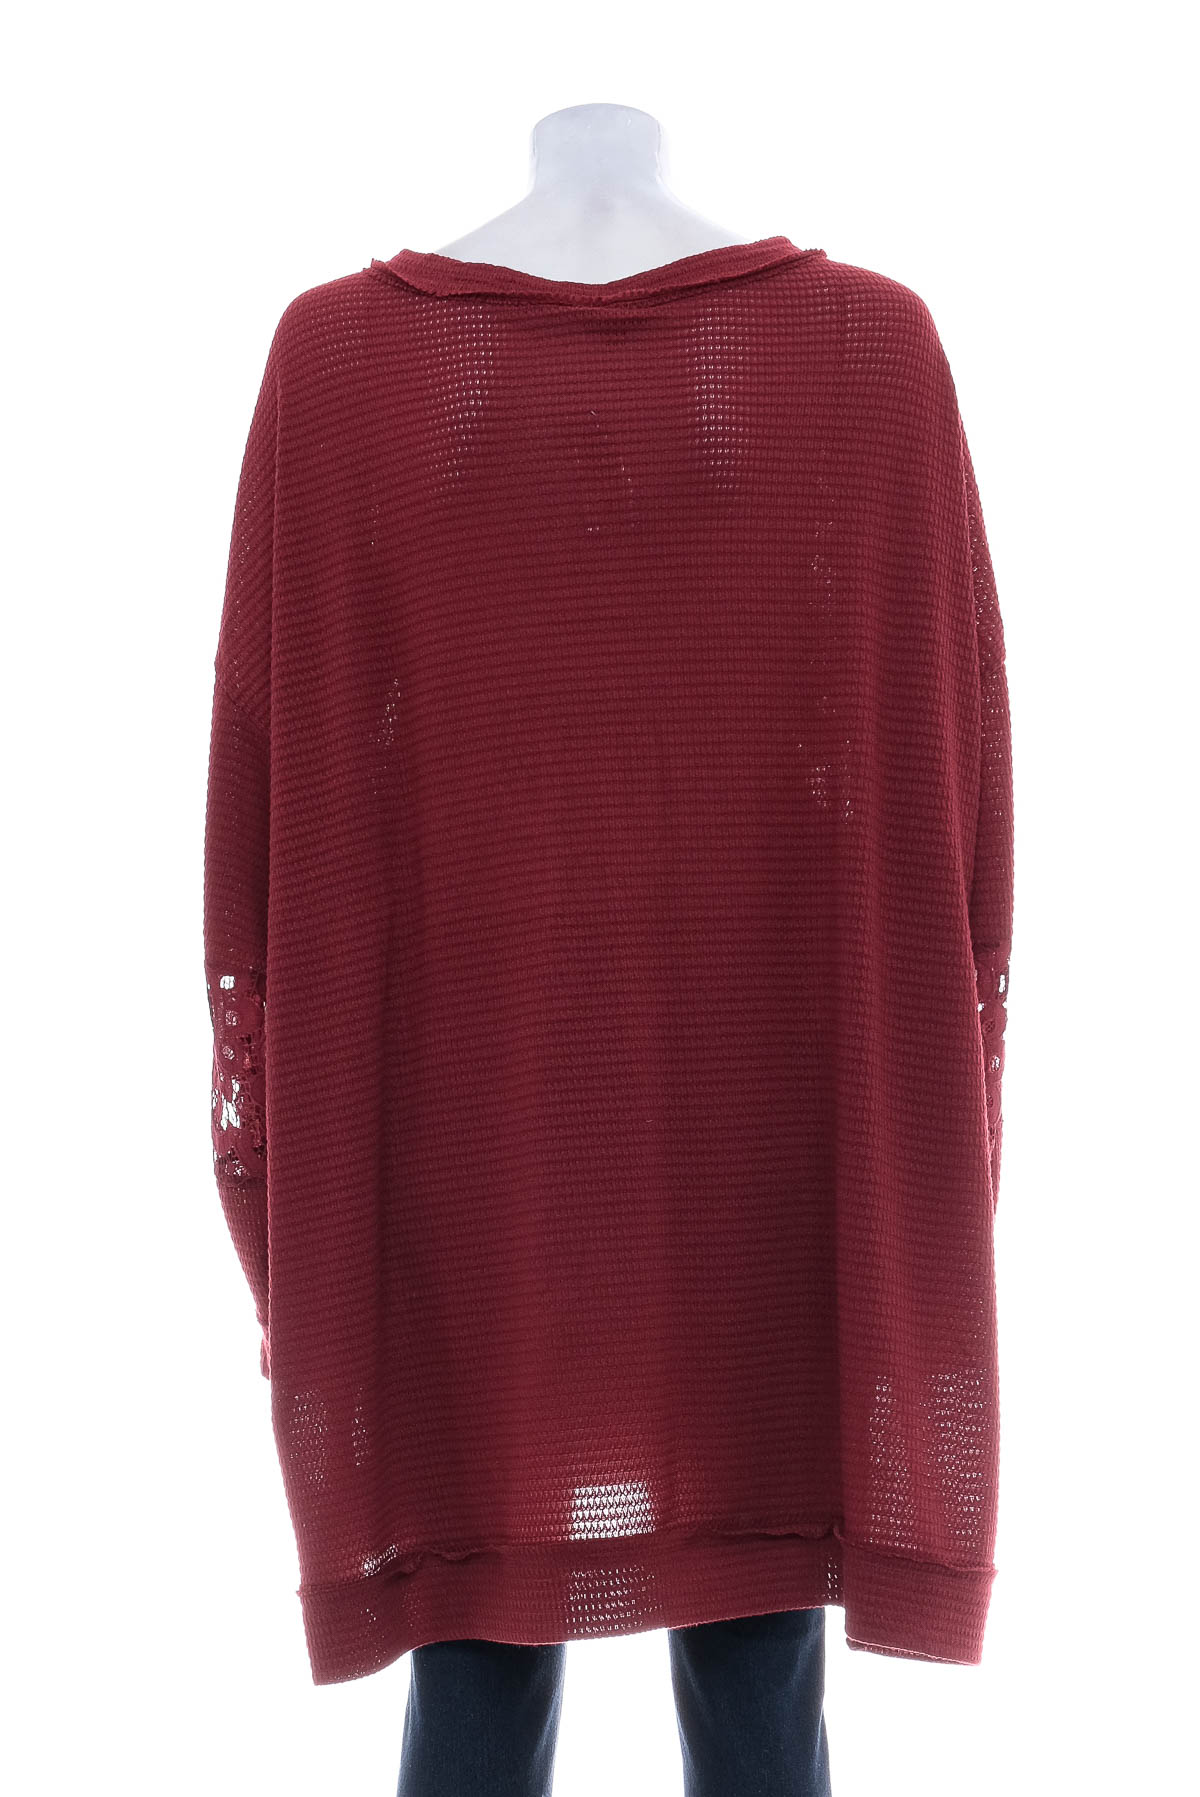 Women's sweater - Torrid - 1